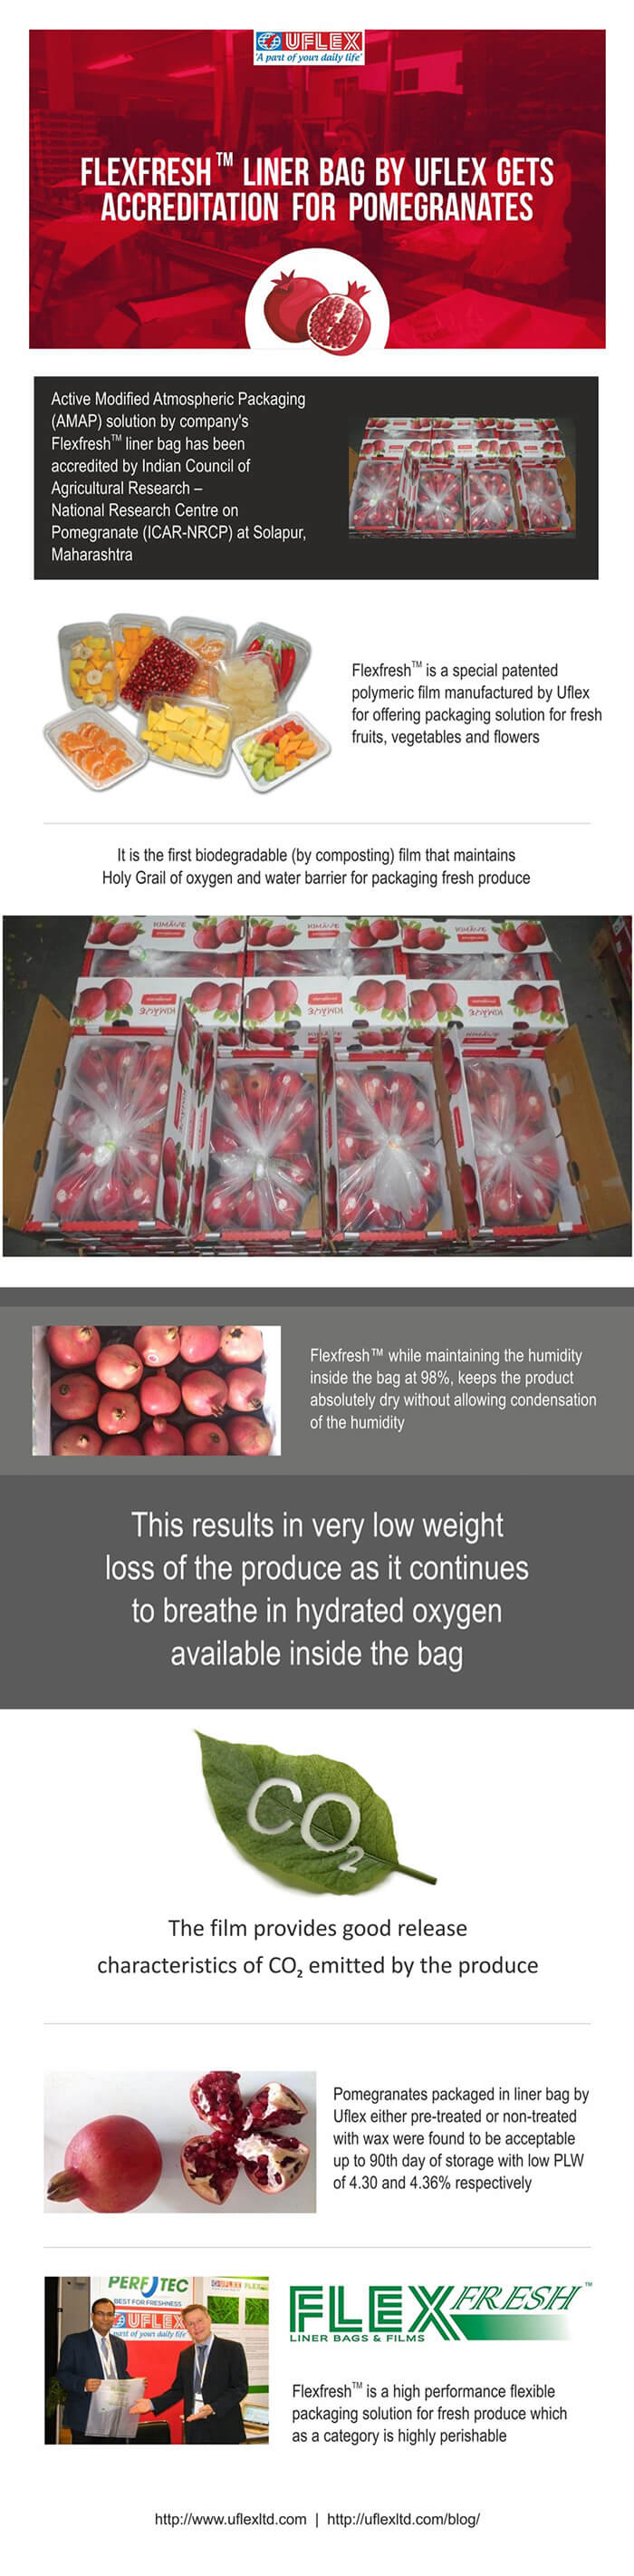 Flexfresh TM Liner Bag By Uflex Gets Accreditation For Pomegranates (1)